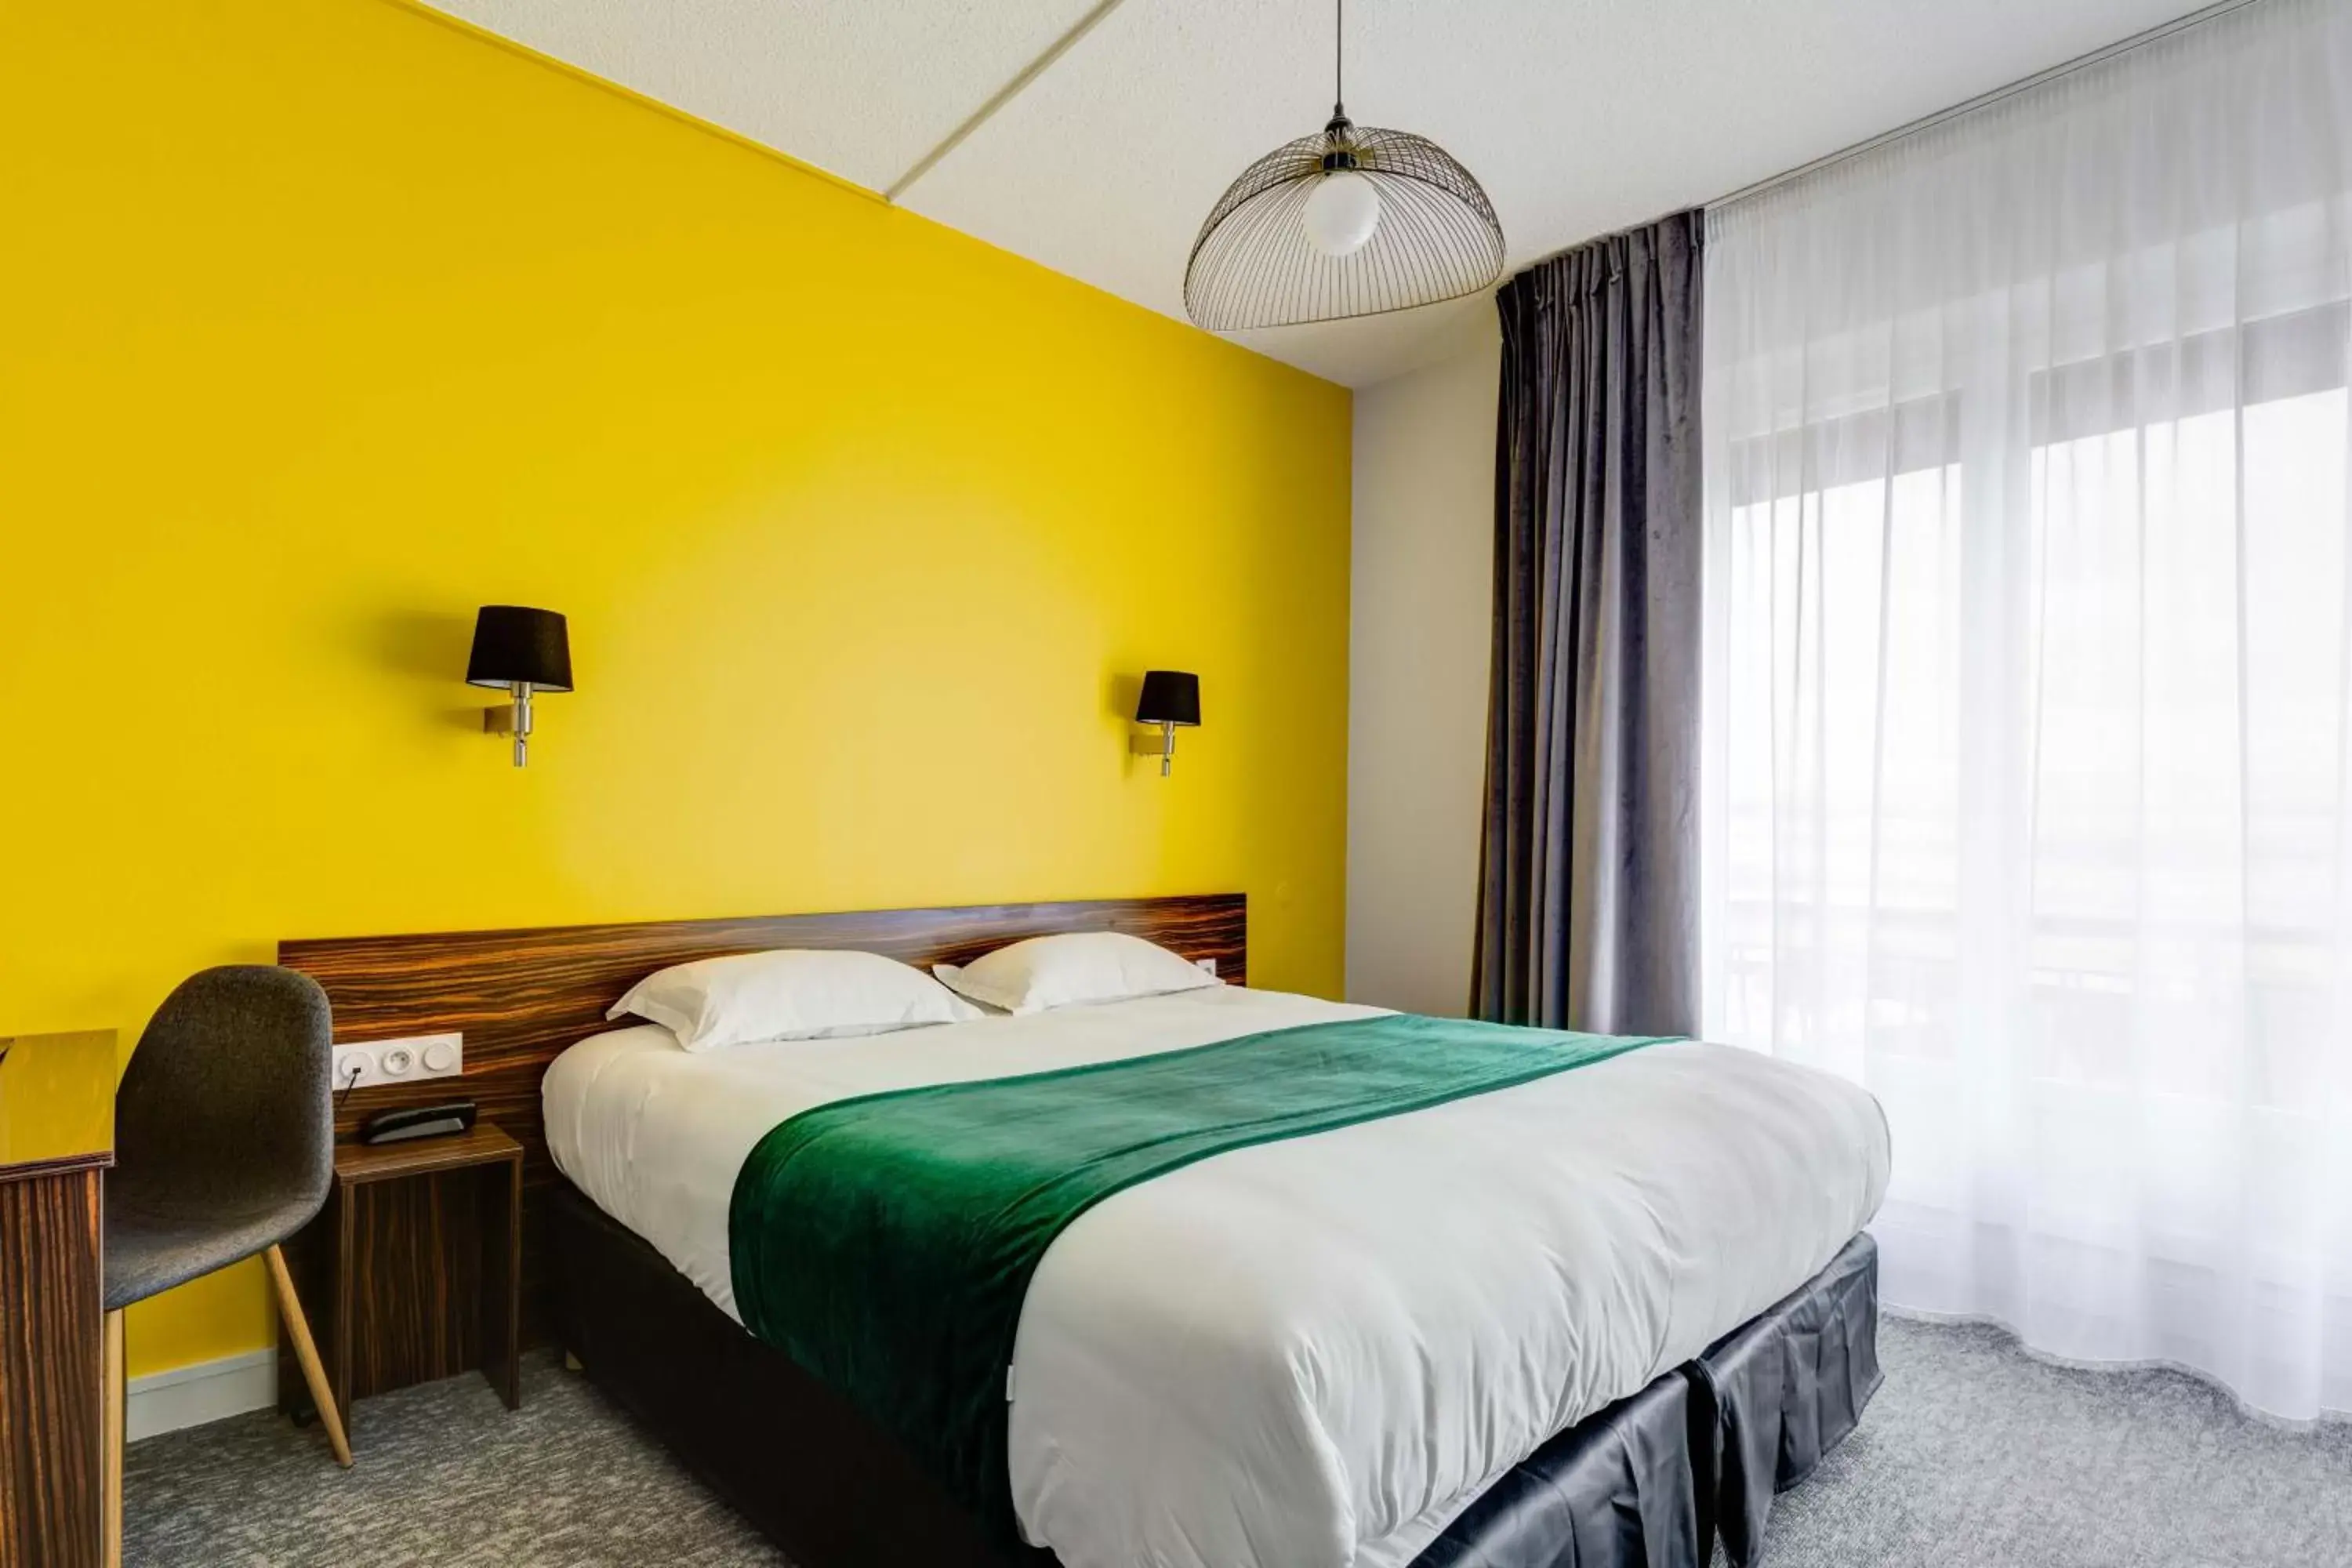 Bed in le paris brest hotel